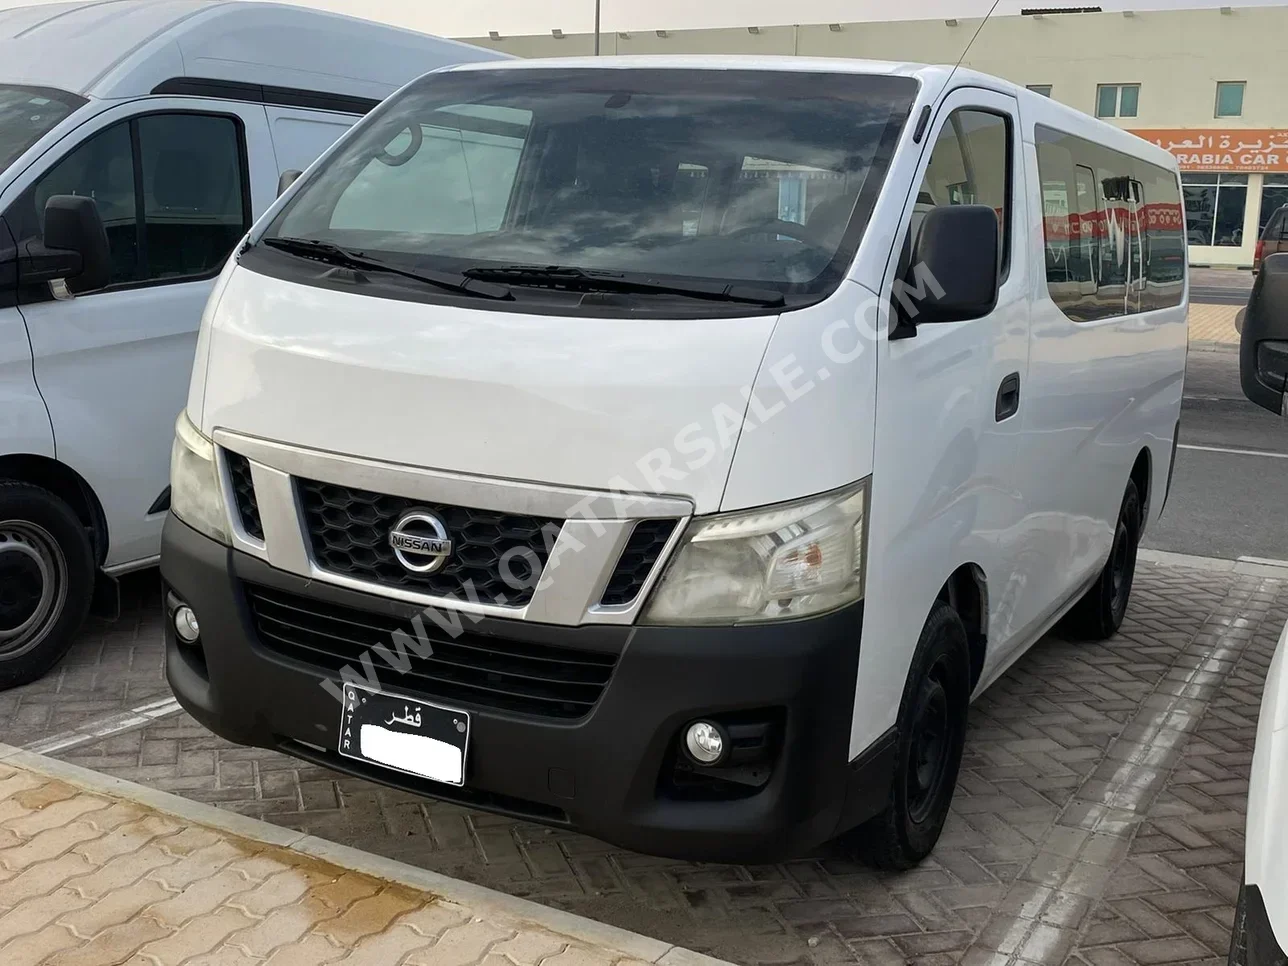 Nissan  Urvan  NV350  2016  Manual  186,000 Km  4 Cylinder  Front Wheel Drive (FWD)  Van / Bus  White